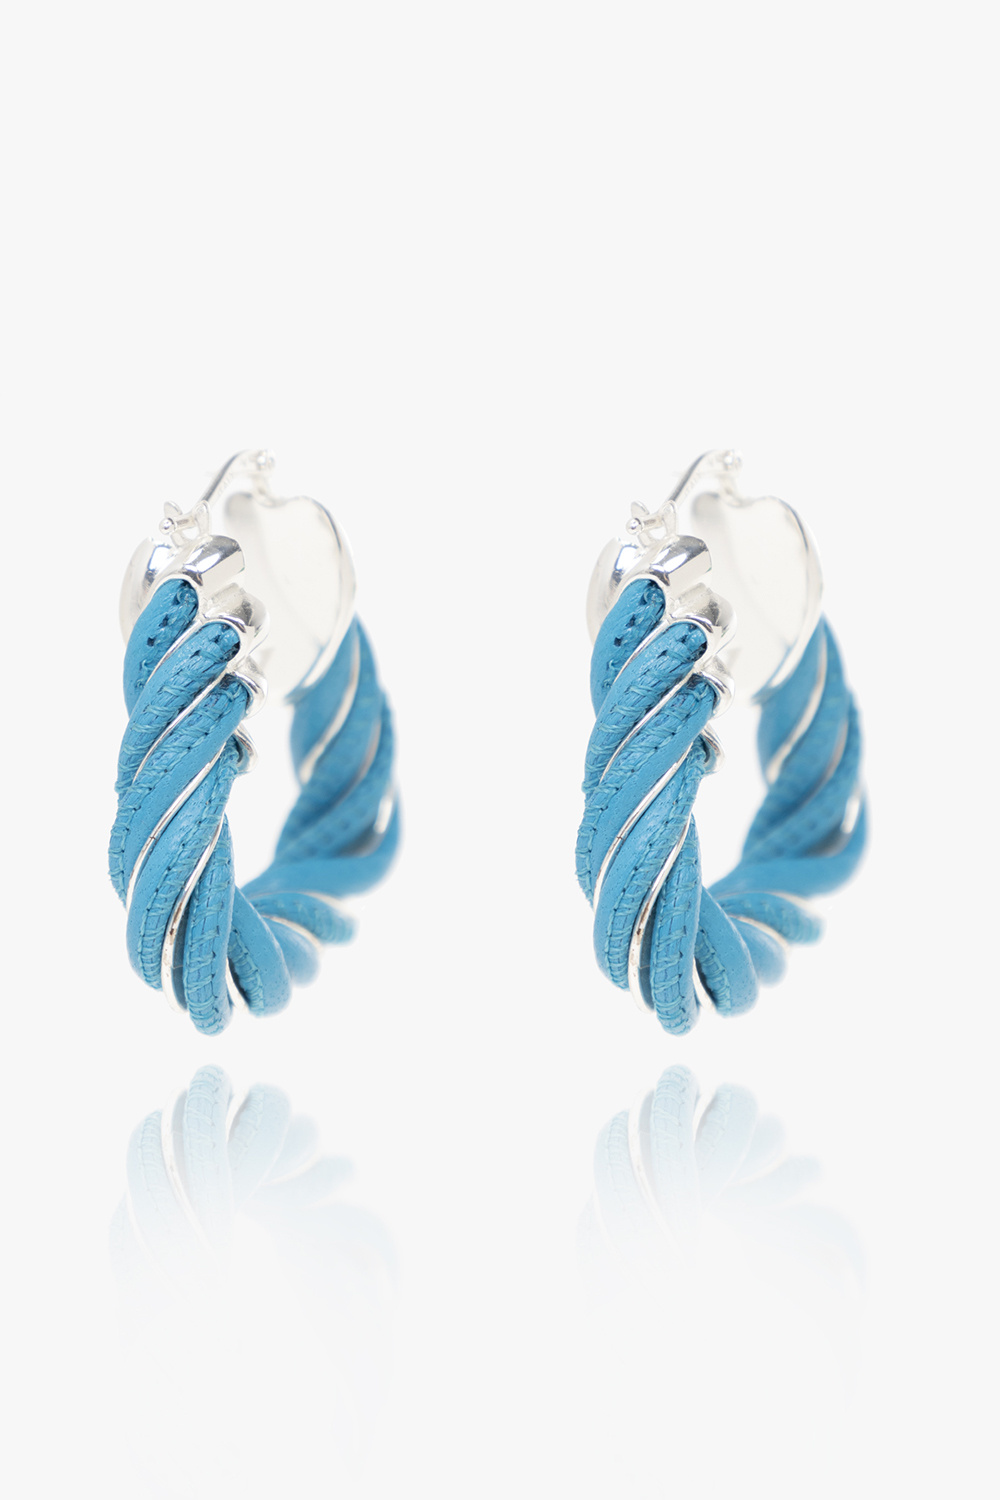 bottega shearling Veneta Triangular earrings